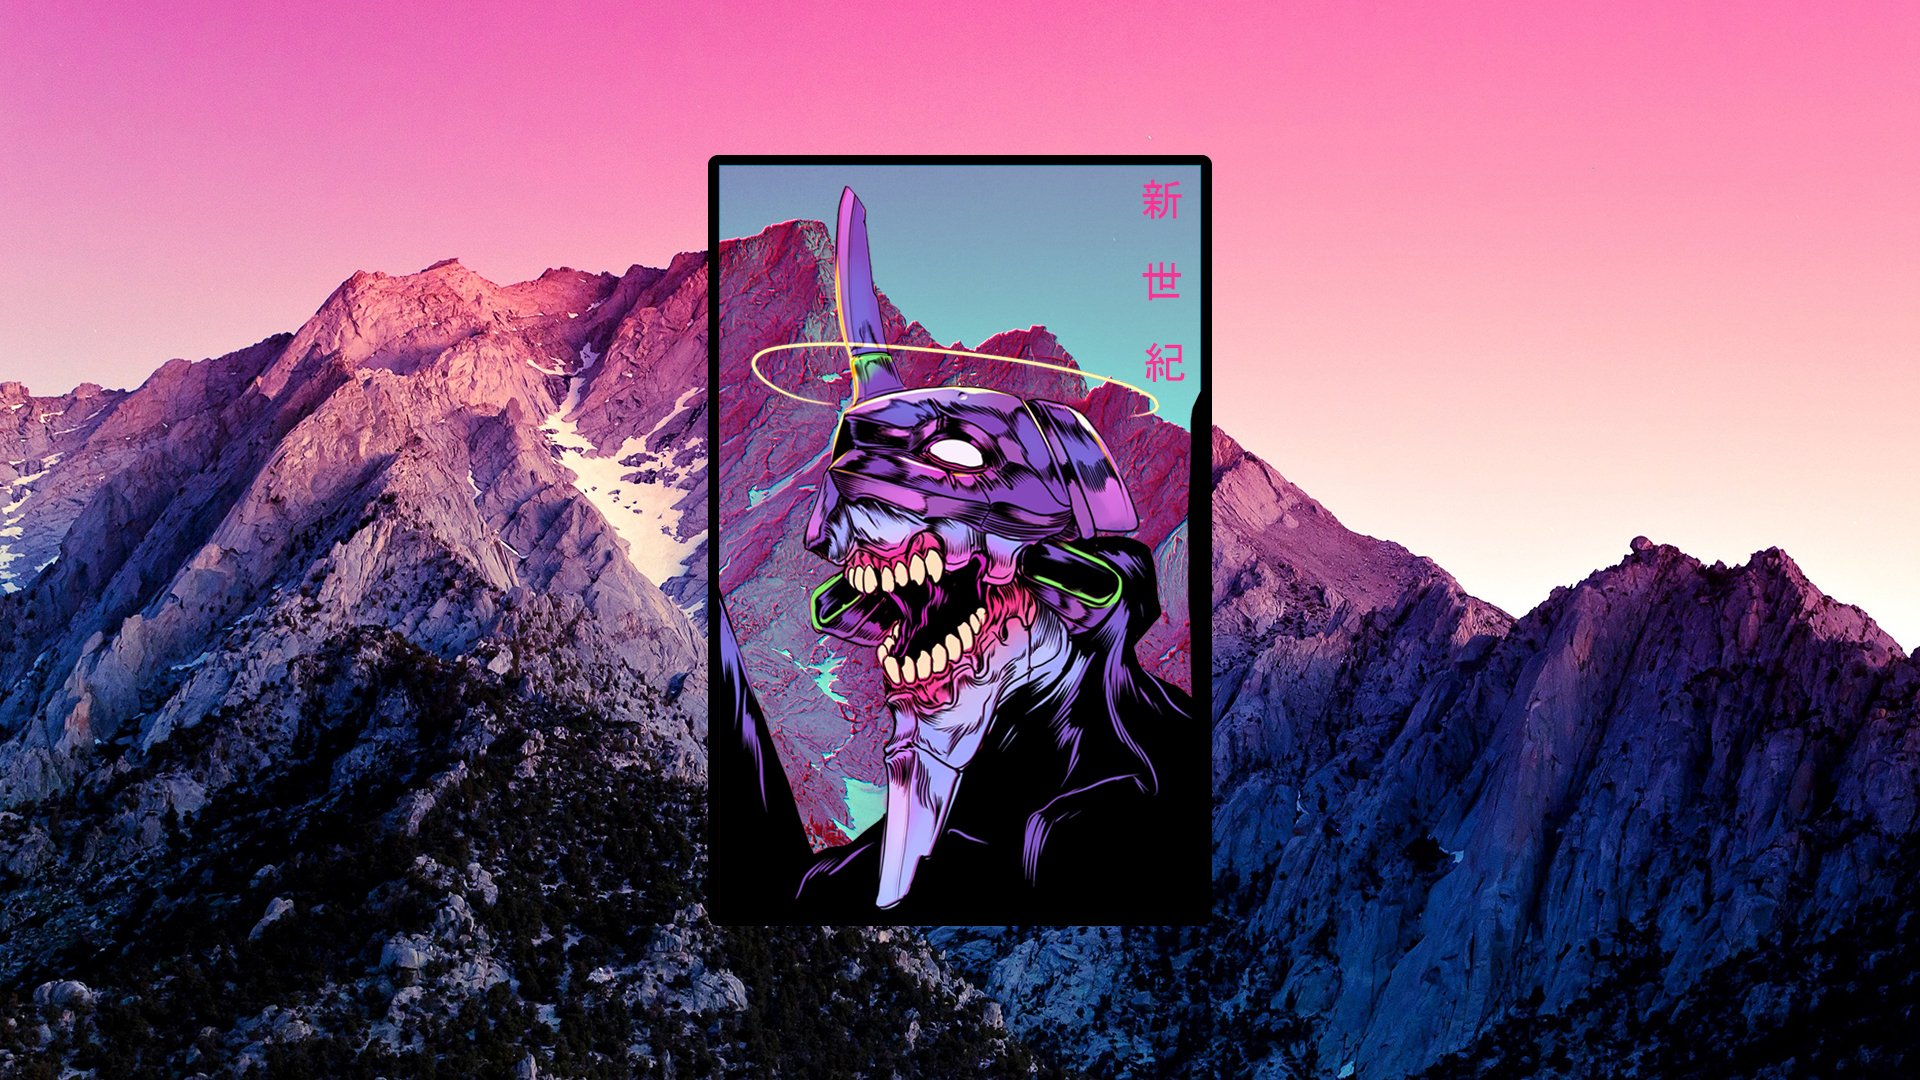 evangelion wallpaper,mountain,purple,sky,graphic design,illustration